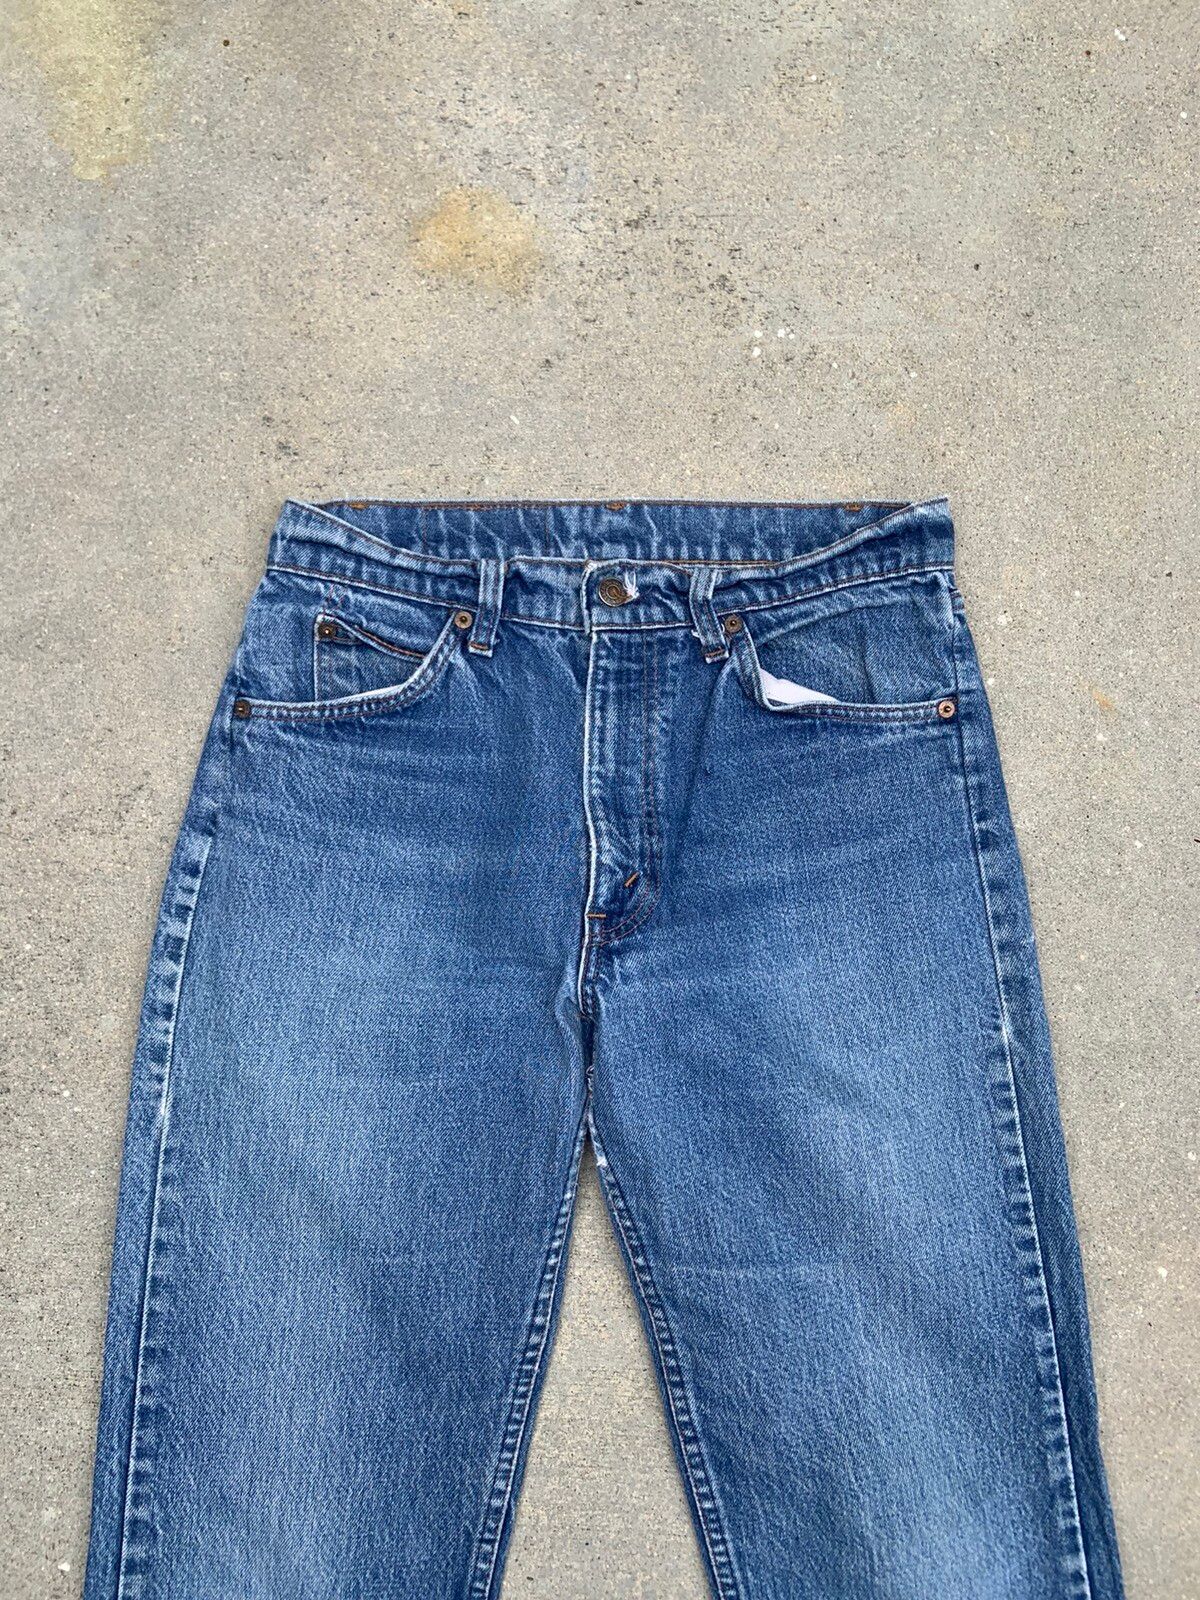 Vintage Vintage levis sf 207 orange tab denim jeans Size US 30 / EU 46 - 3 Thumbnail